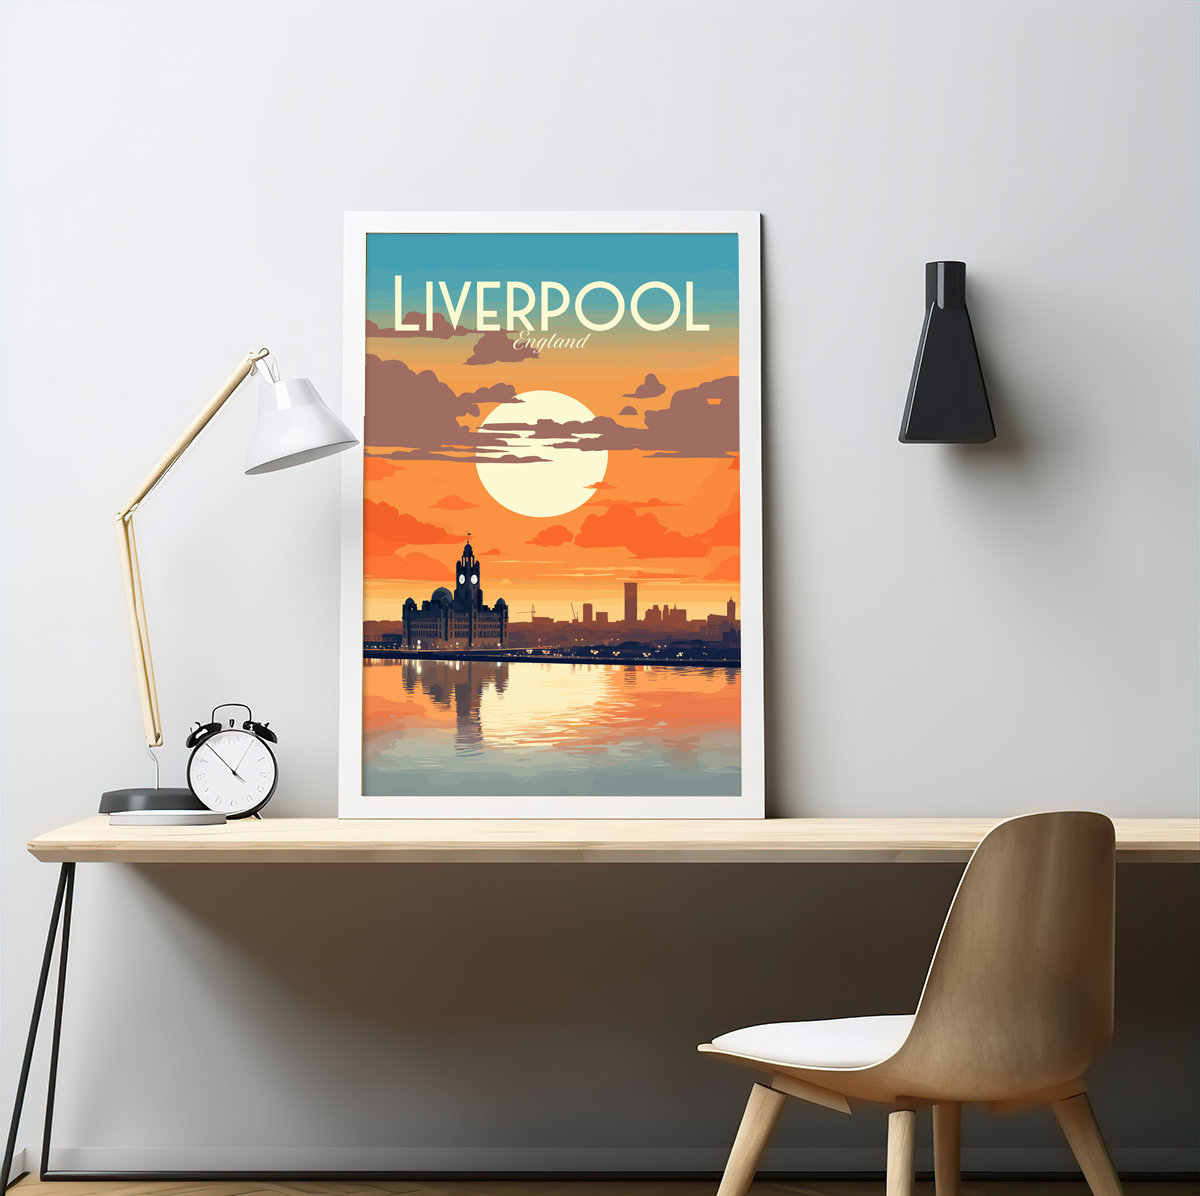 Liverpool poster by bon voyage design